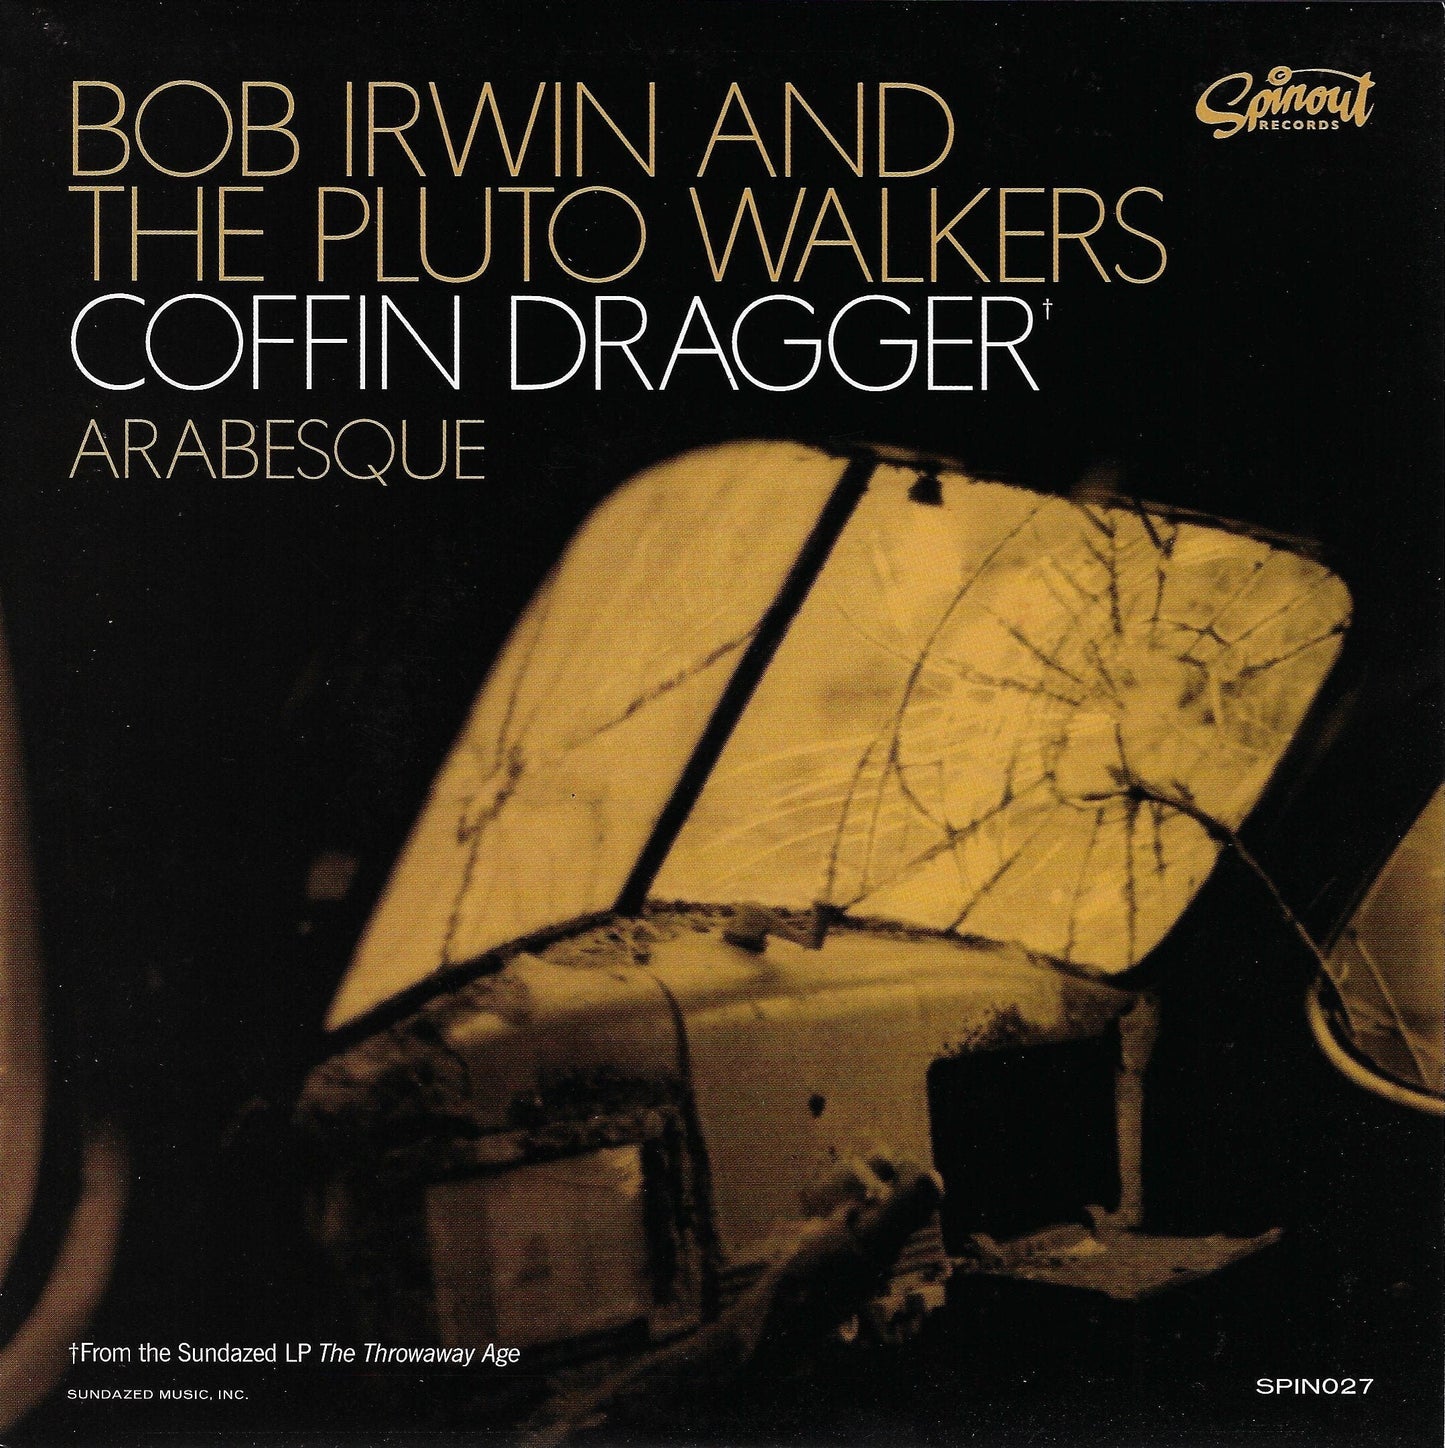 Bob Irwin and the Pluto Walkers “Coffin Dragger b/w Arabesque Age” Single